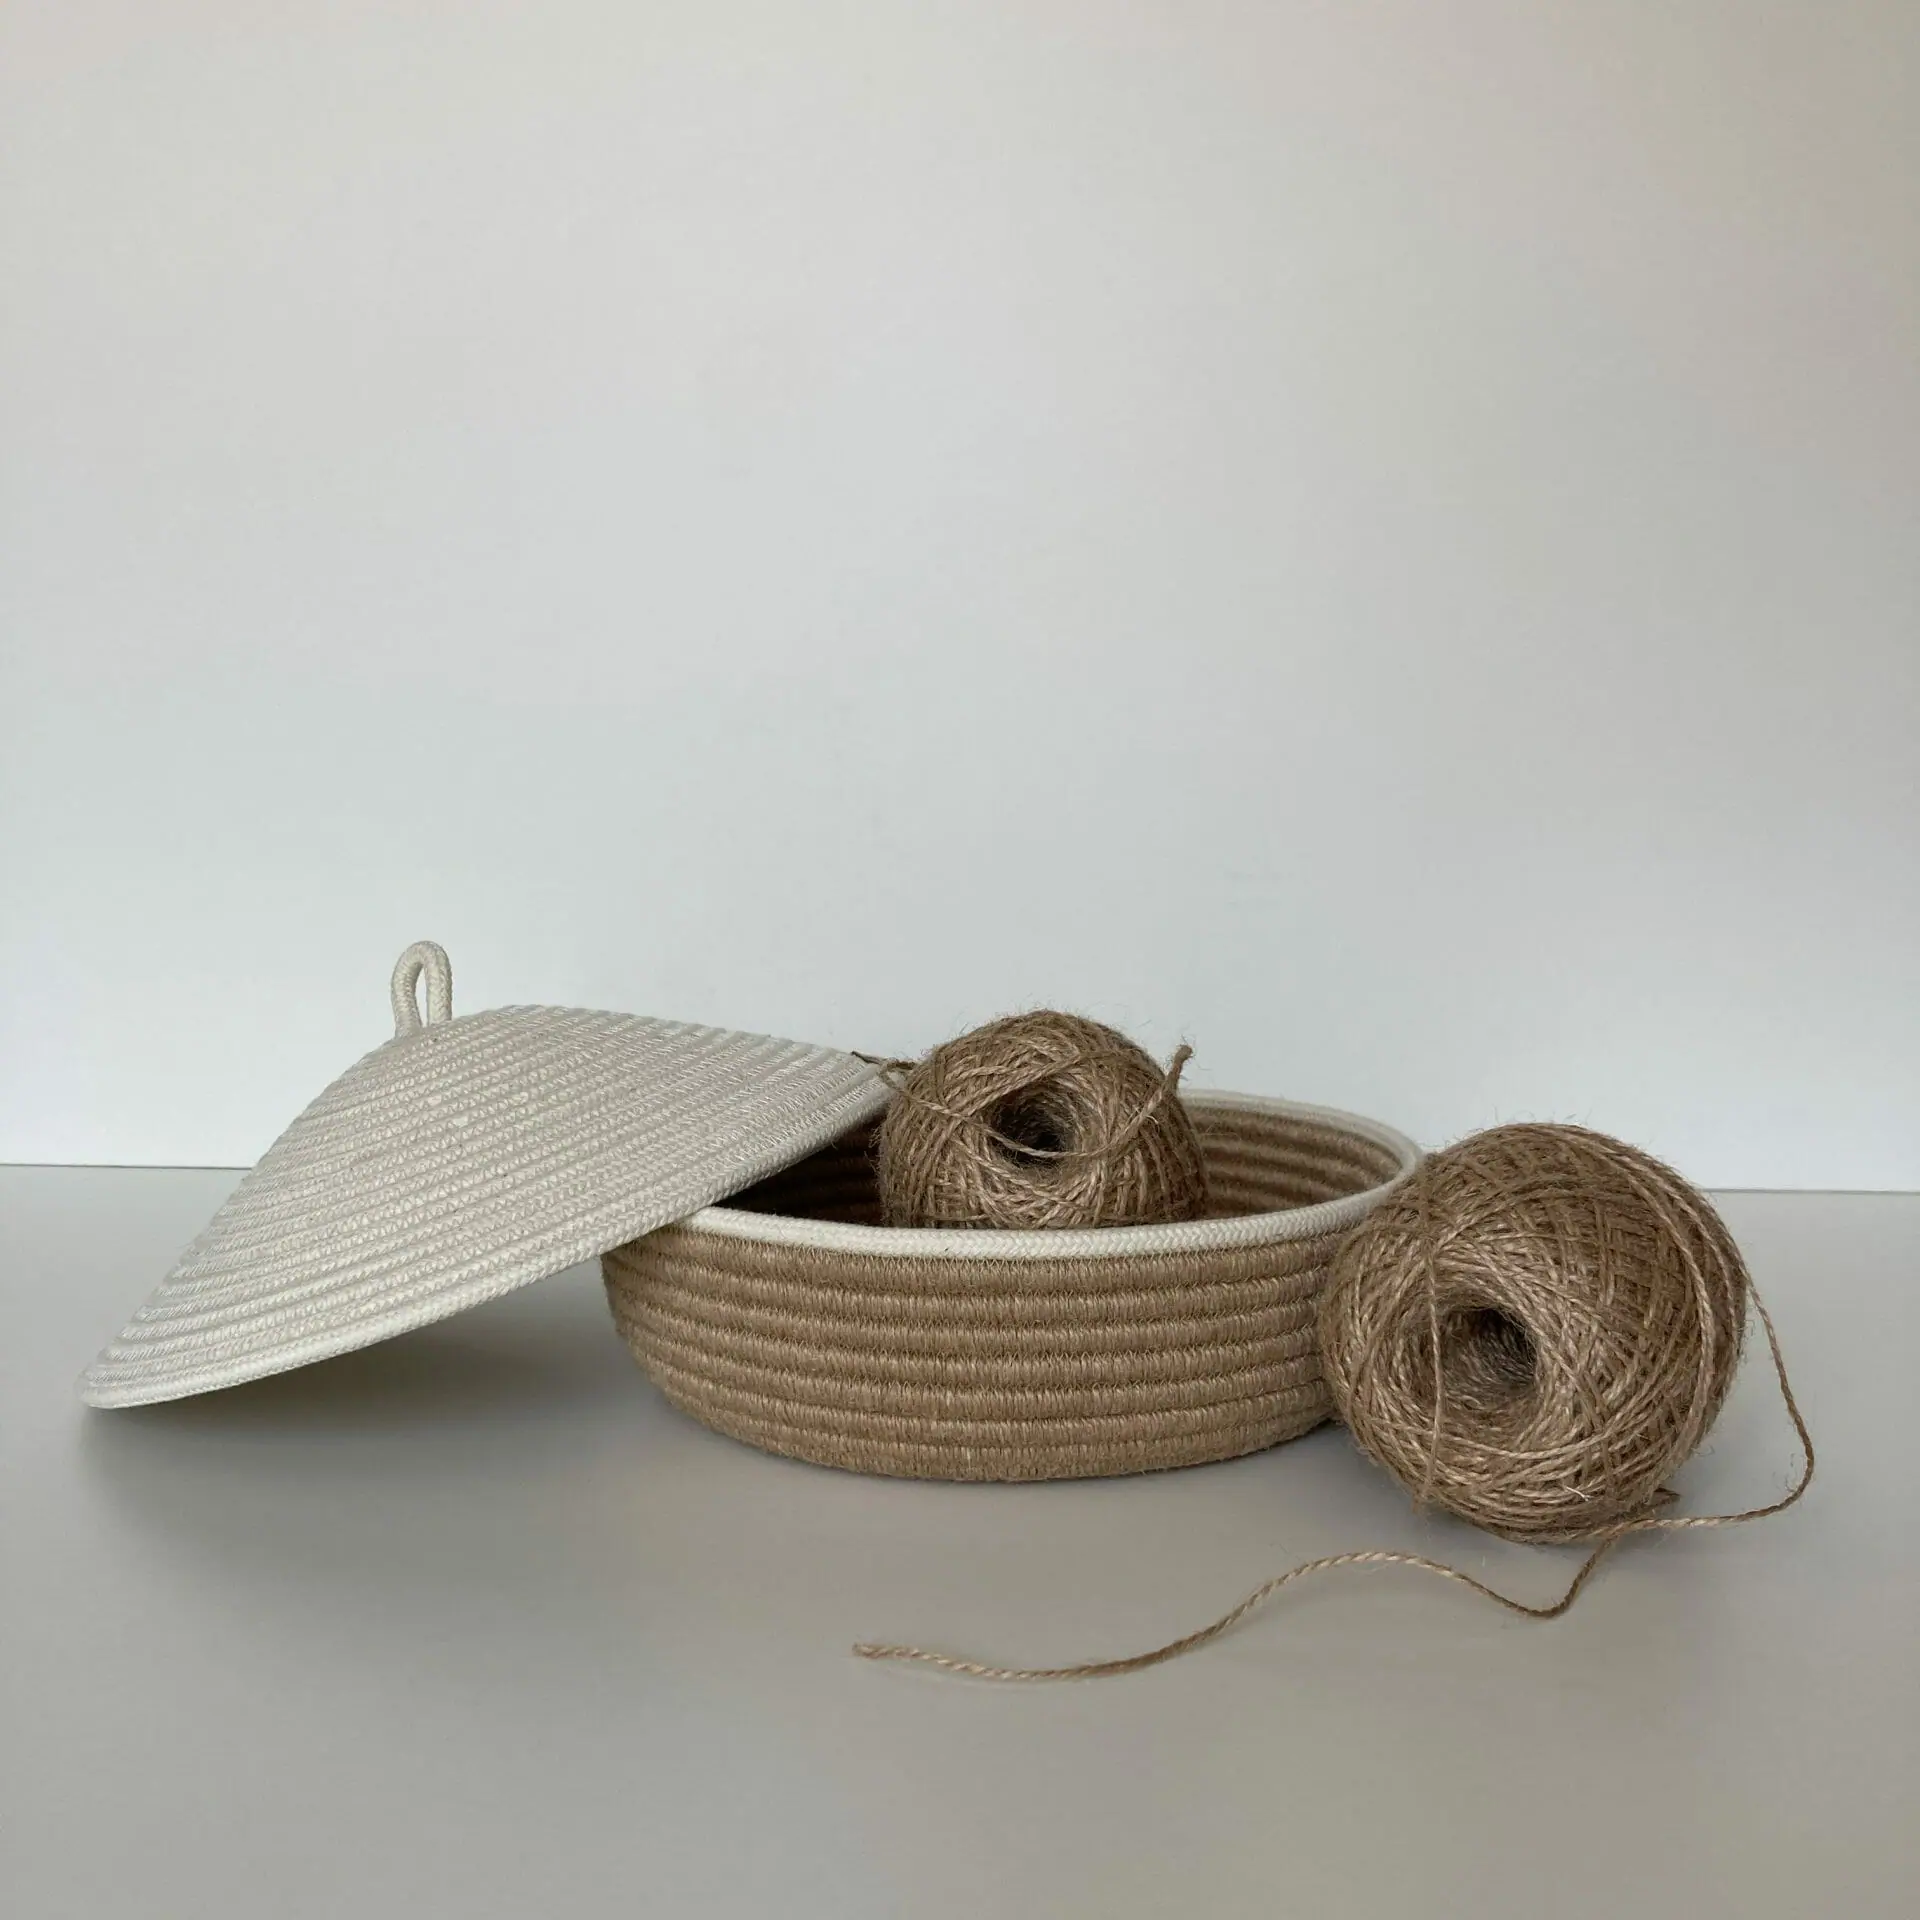 Jute basket with lid 22 cm x 13 cm Cotton rope basket